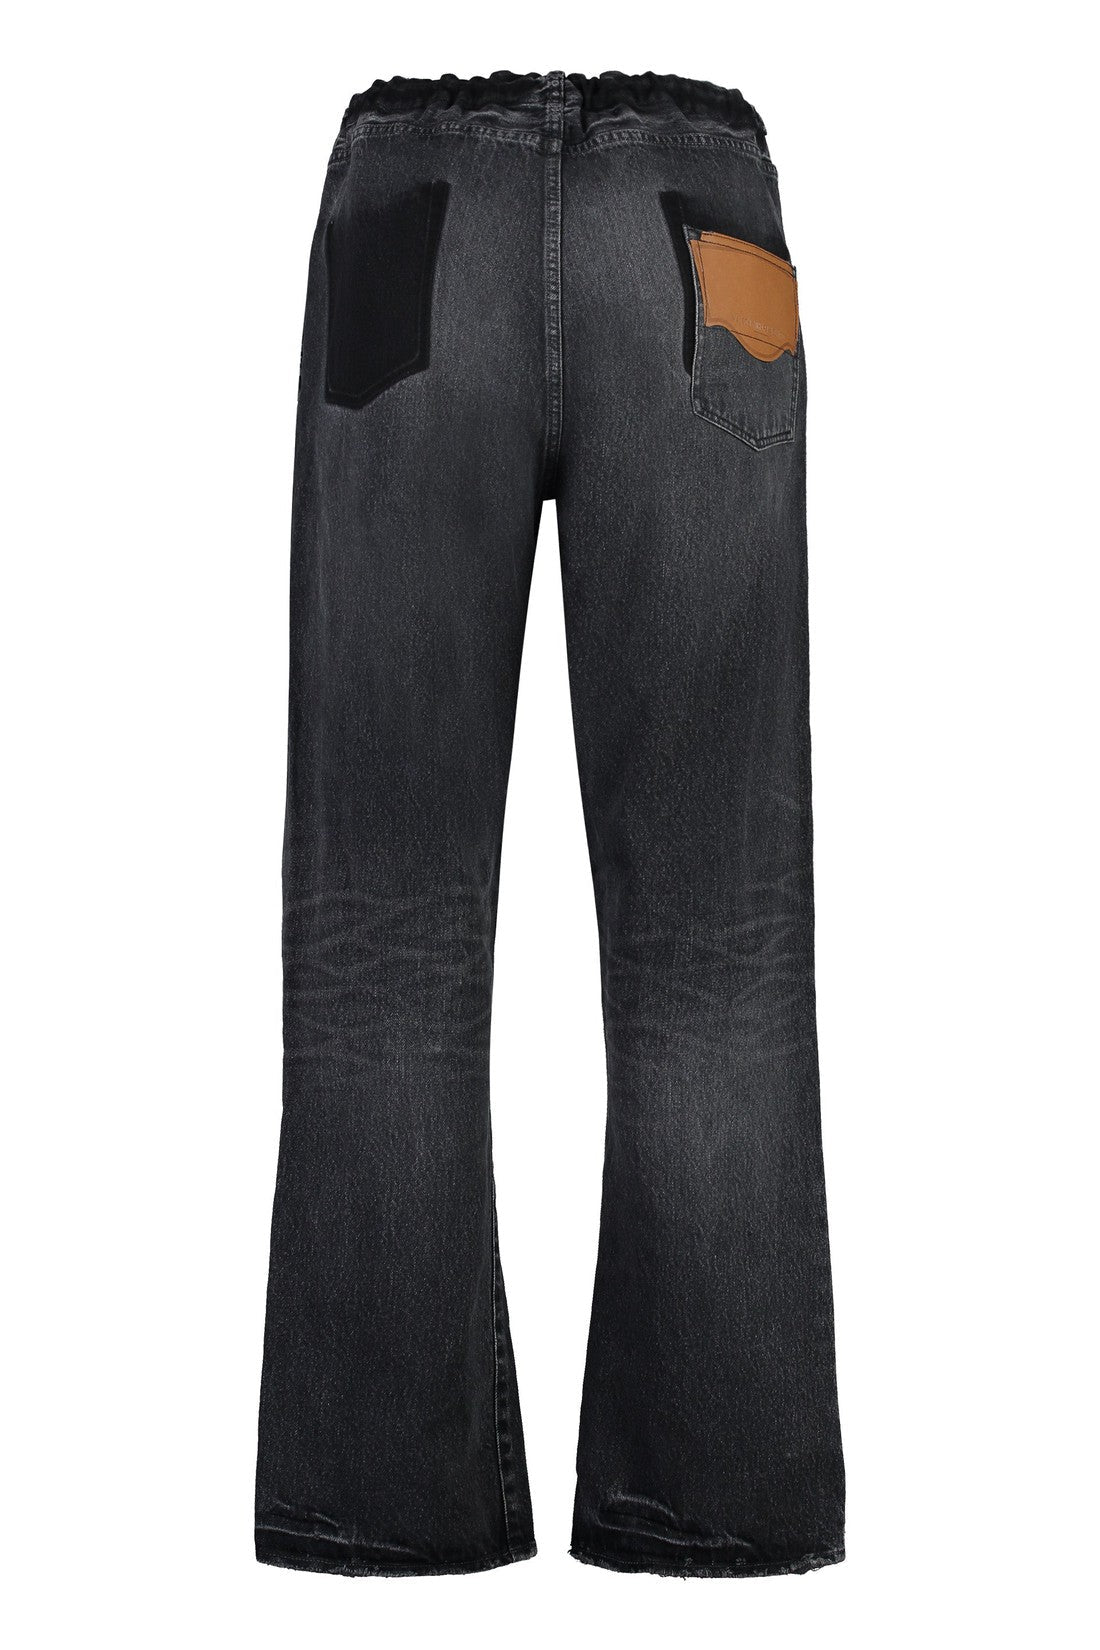 Maison Mihara Yasuhiro-OUTLET-SALE-5-pocket straight-leg jeans-ARCHIVIST